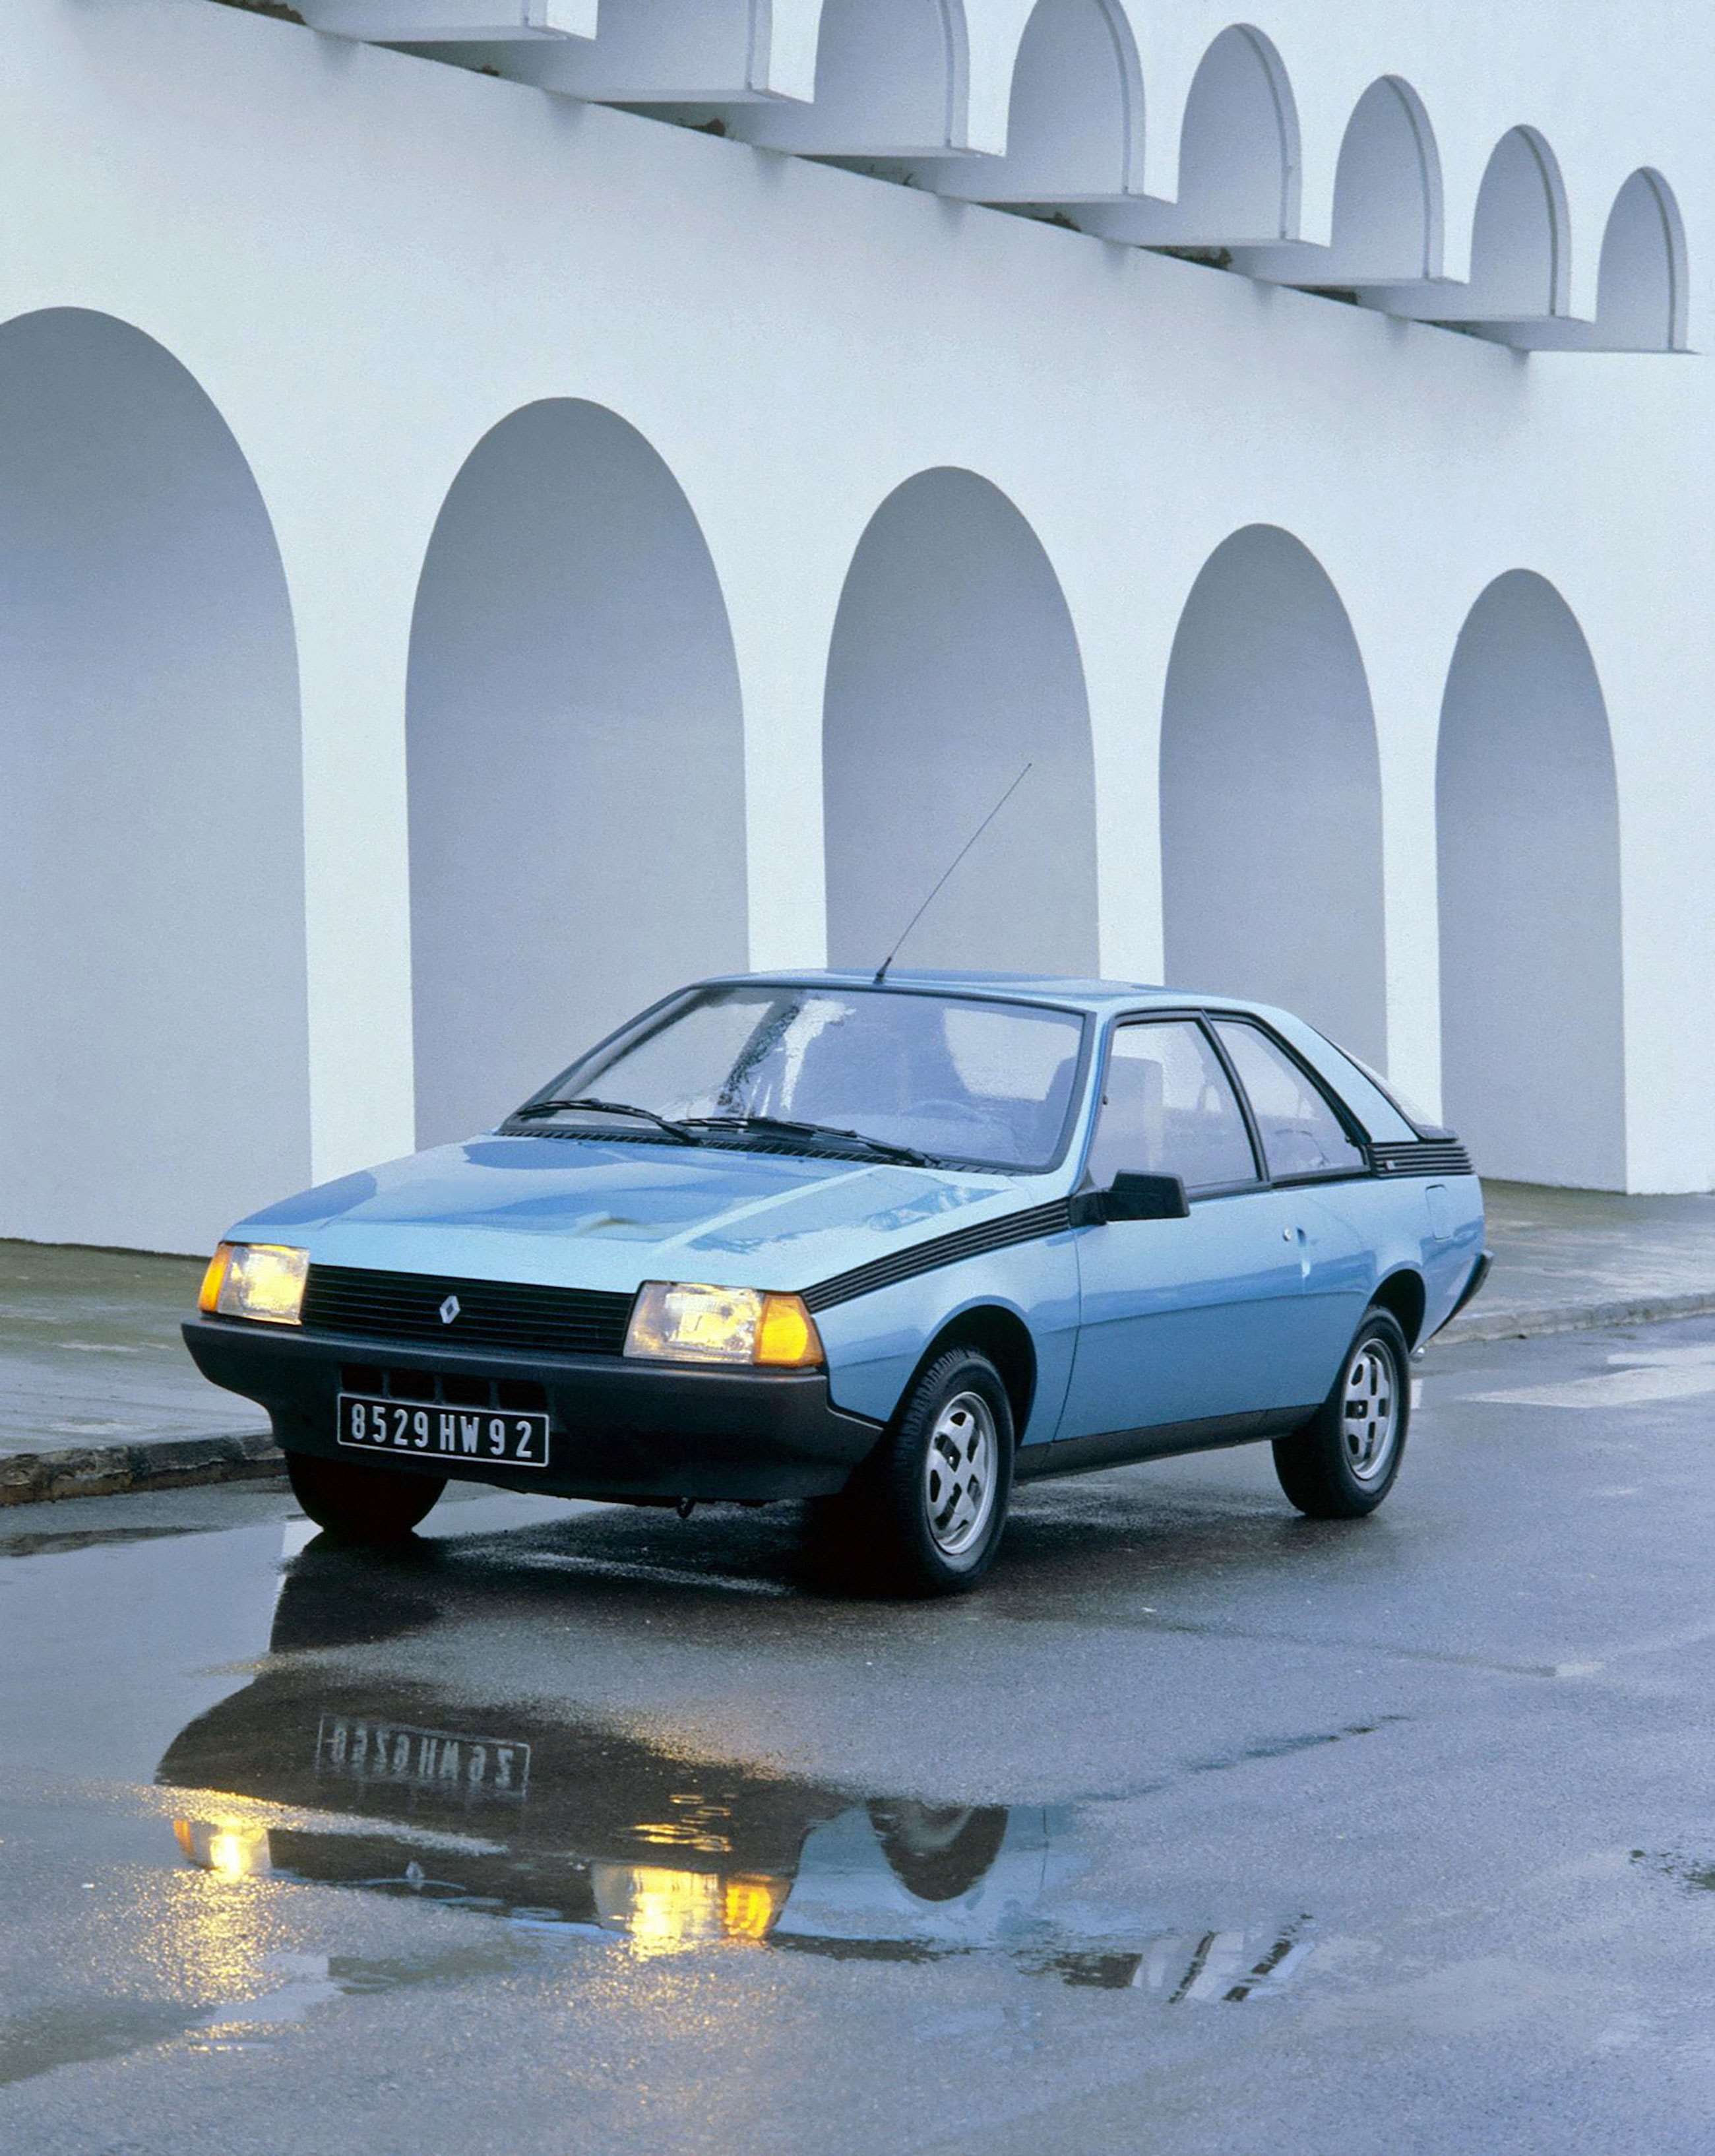 six-automotive-flops-1980-5-renault-fuego-goodwood-07122020.jpg